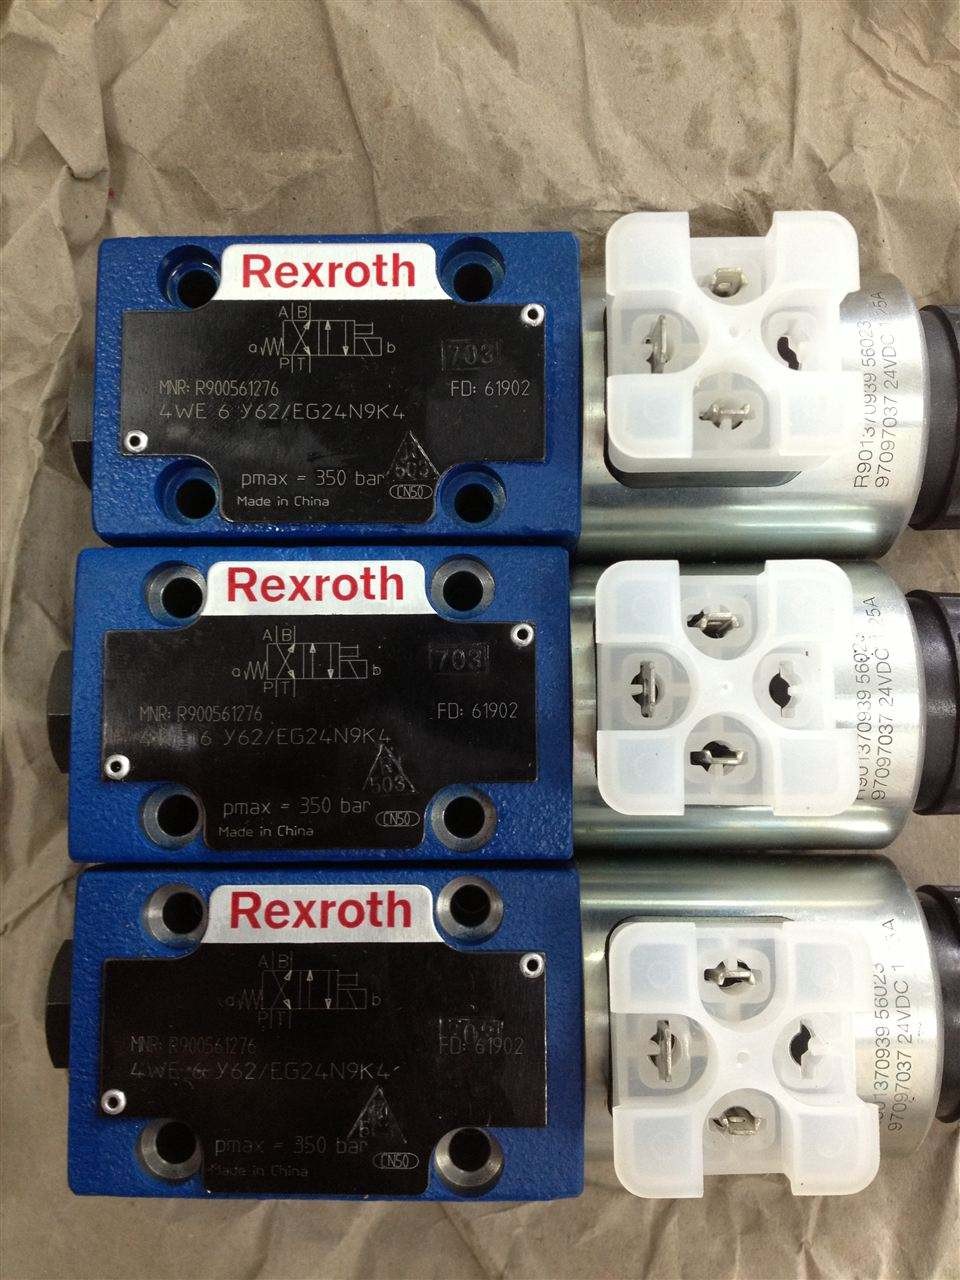 REXROTH M-3SED 6 UK1X/350CG24N9K4 R900052621 Valves